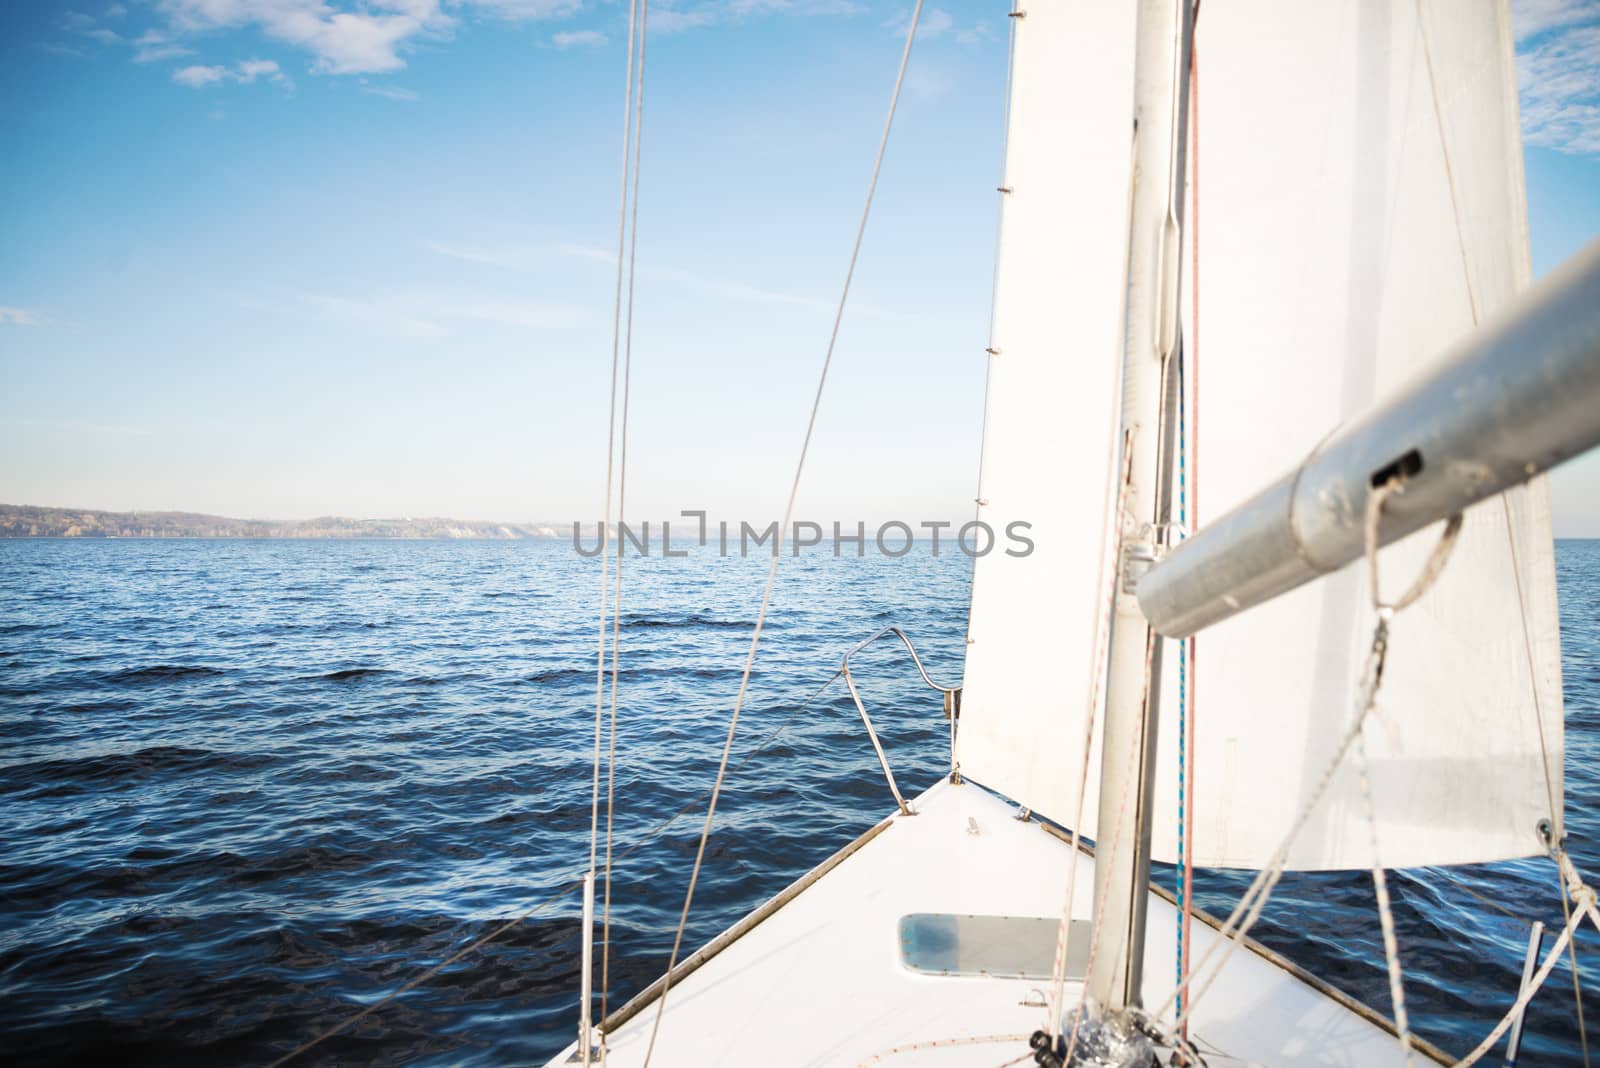 Yacht sailing towards the sunset by Nickolya